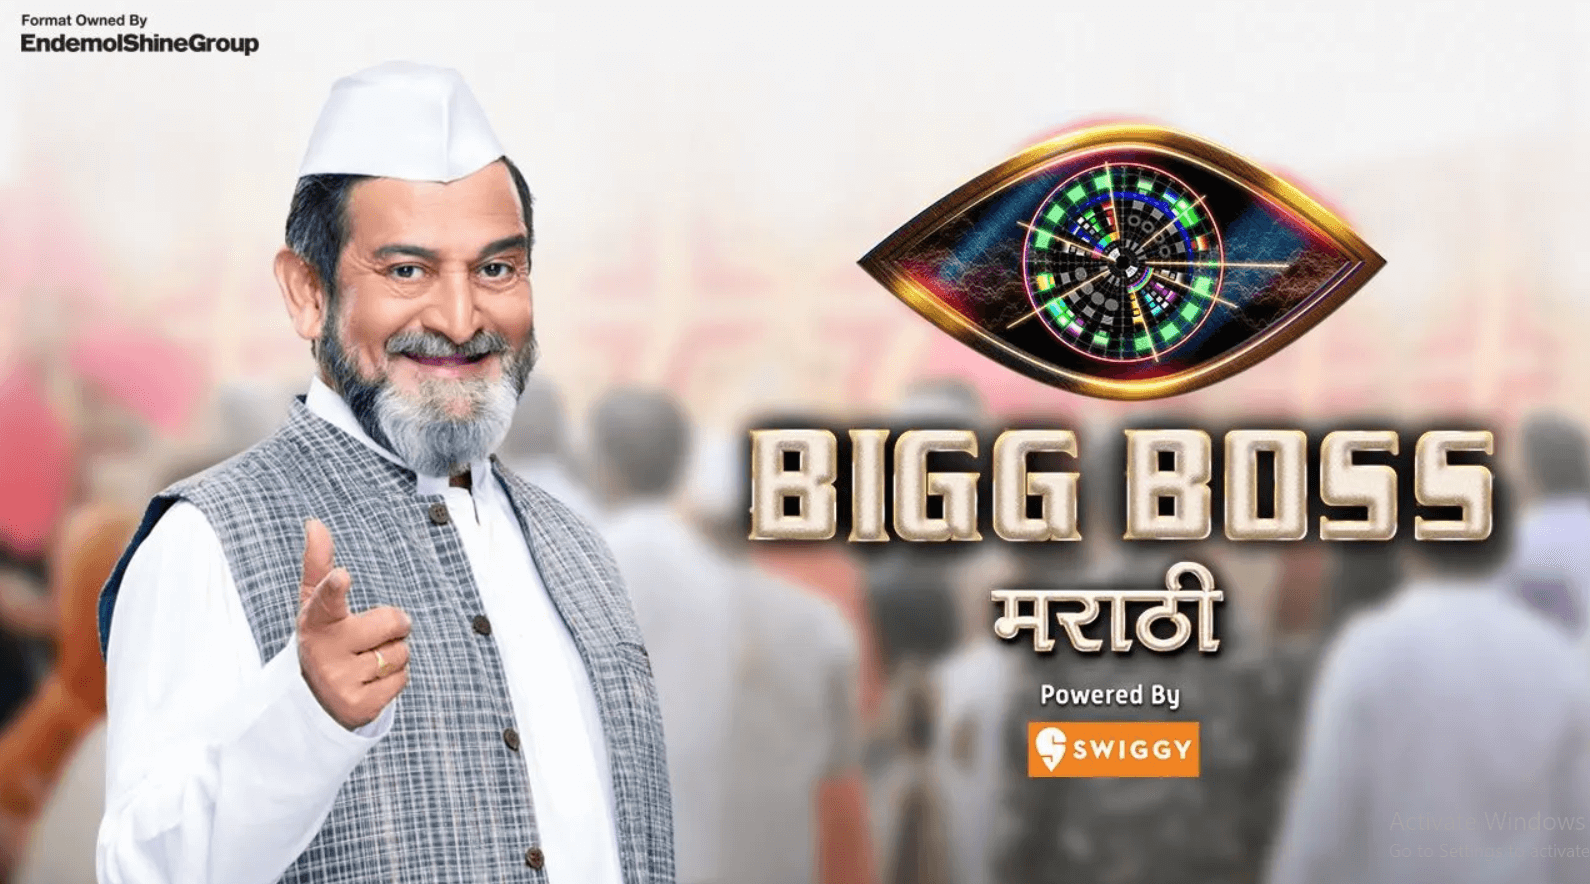 Bigg Boss Marathi Vote Season 2 